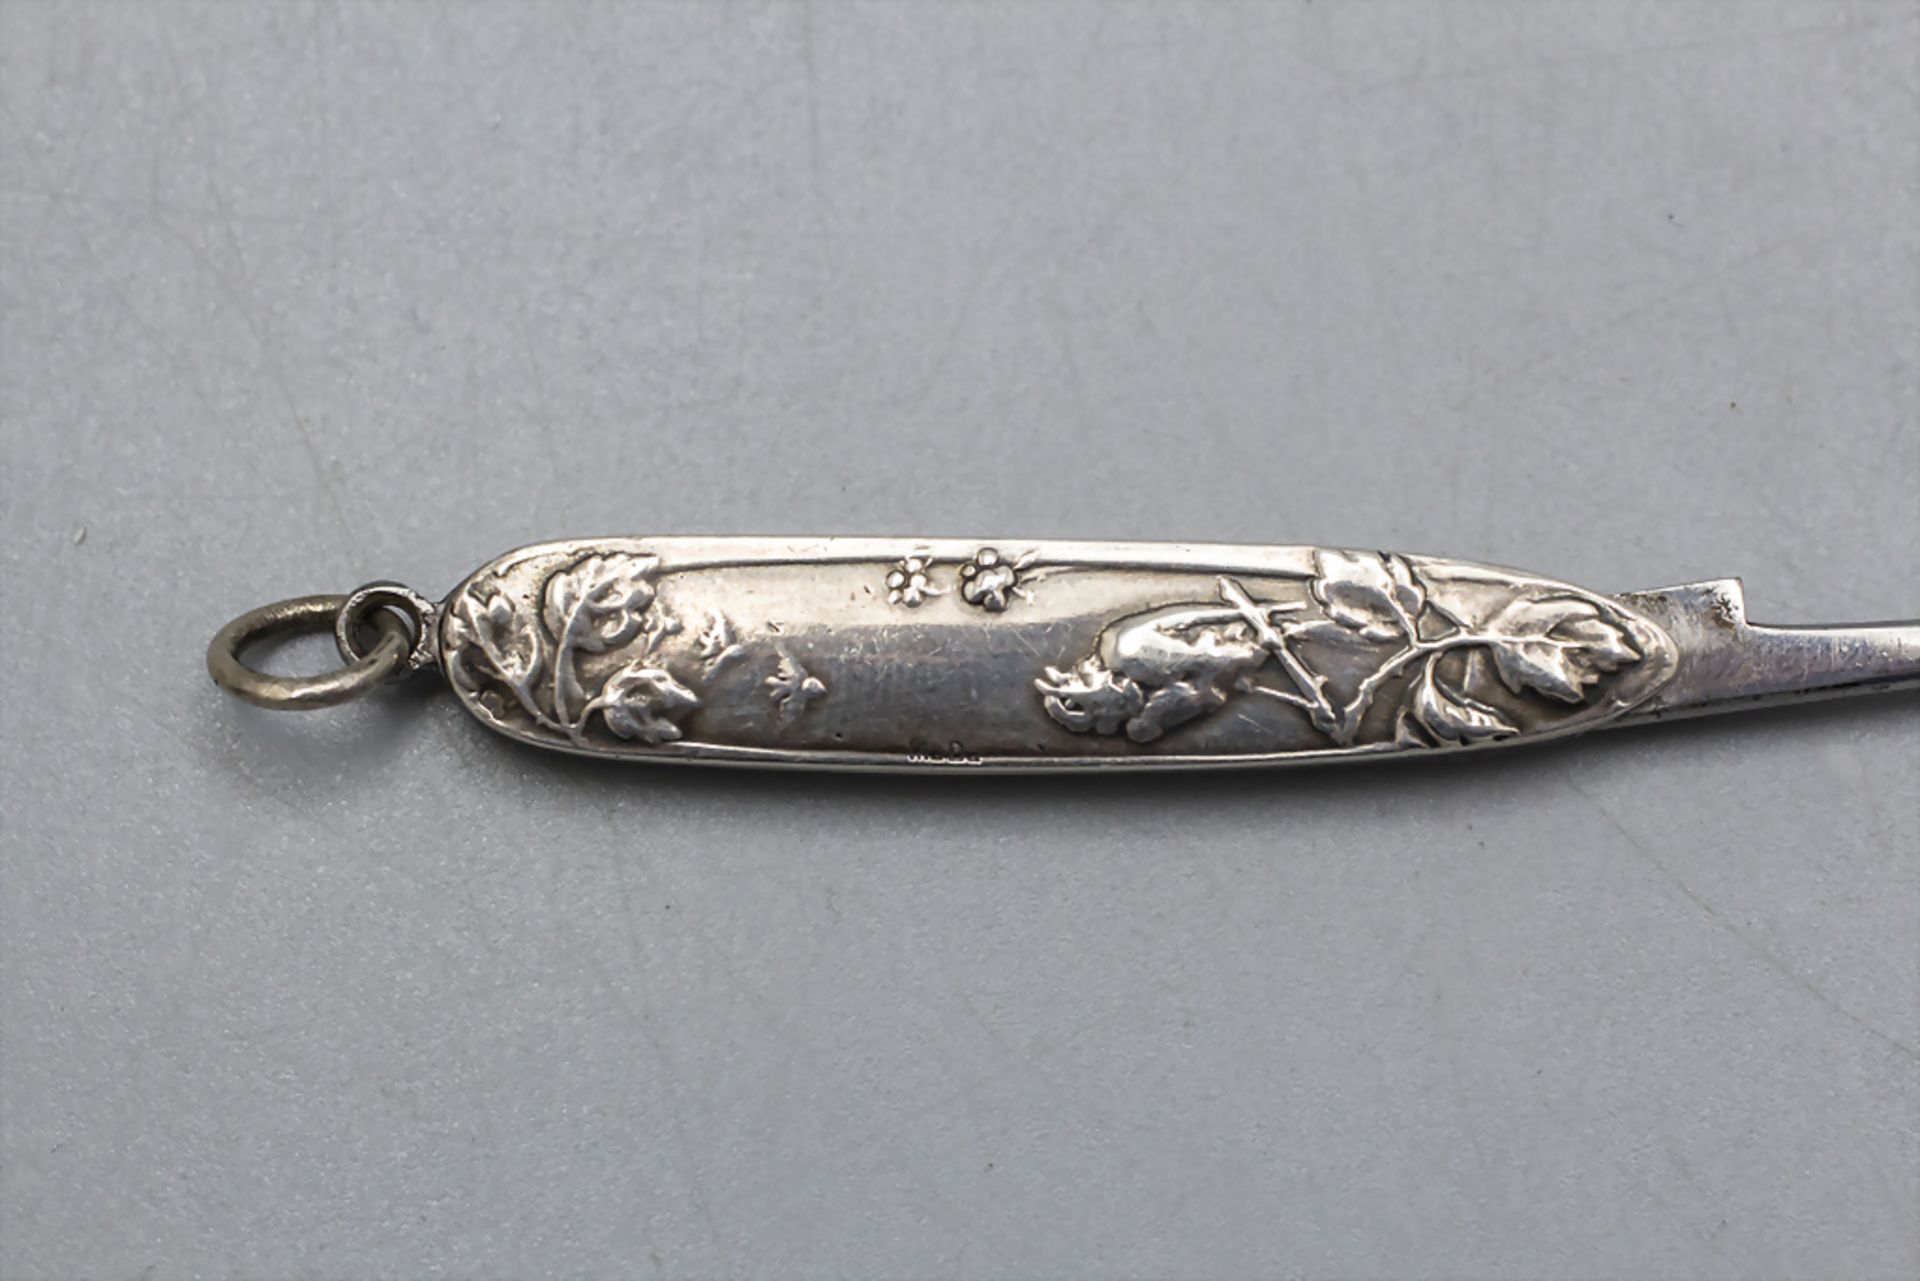 Jugendstil Taschenmesser, Feile und Haken / An Art Nouveau silver pocket knife, file and hook, ... - Bild 3 aus 3